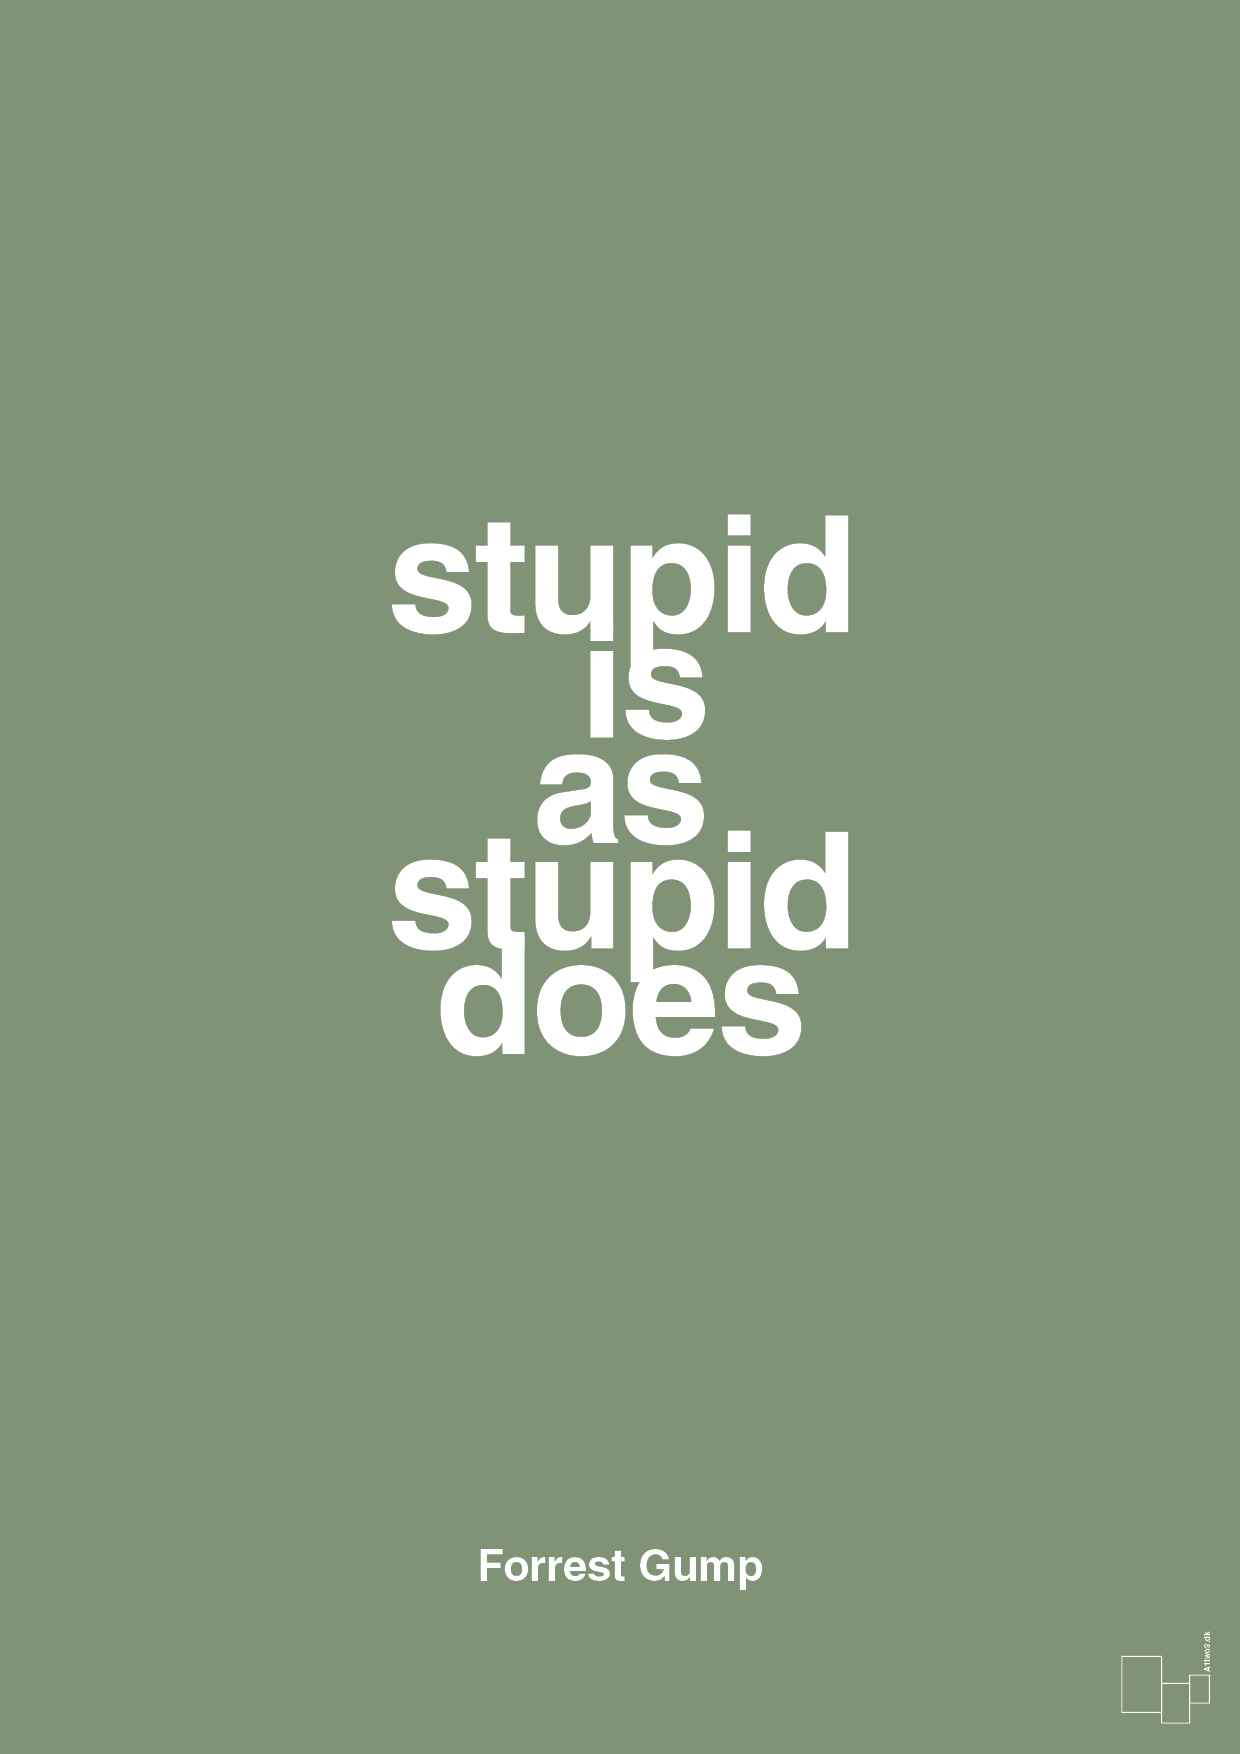 stupid is as stupid does - Plakat med Citater i Jade